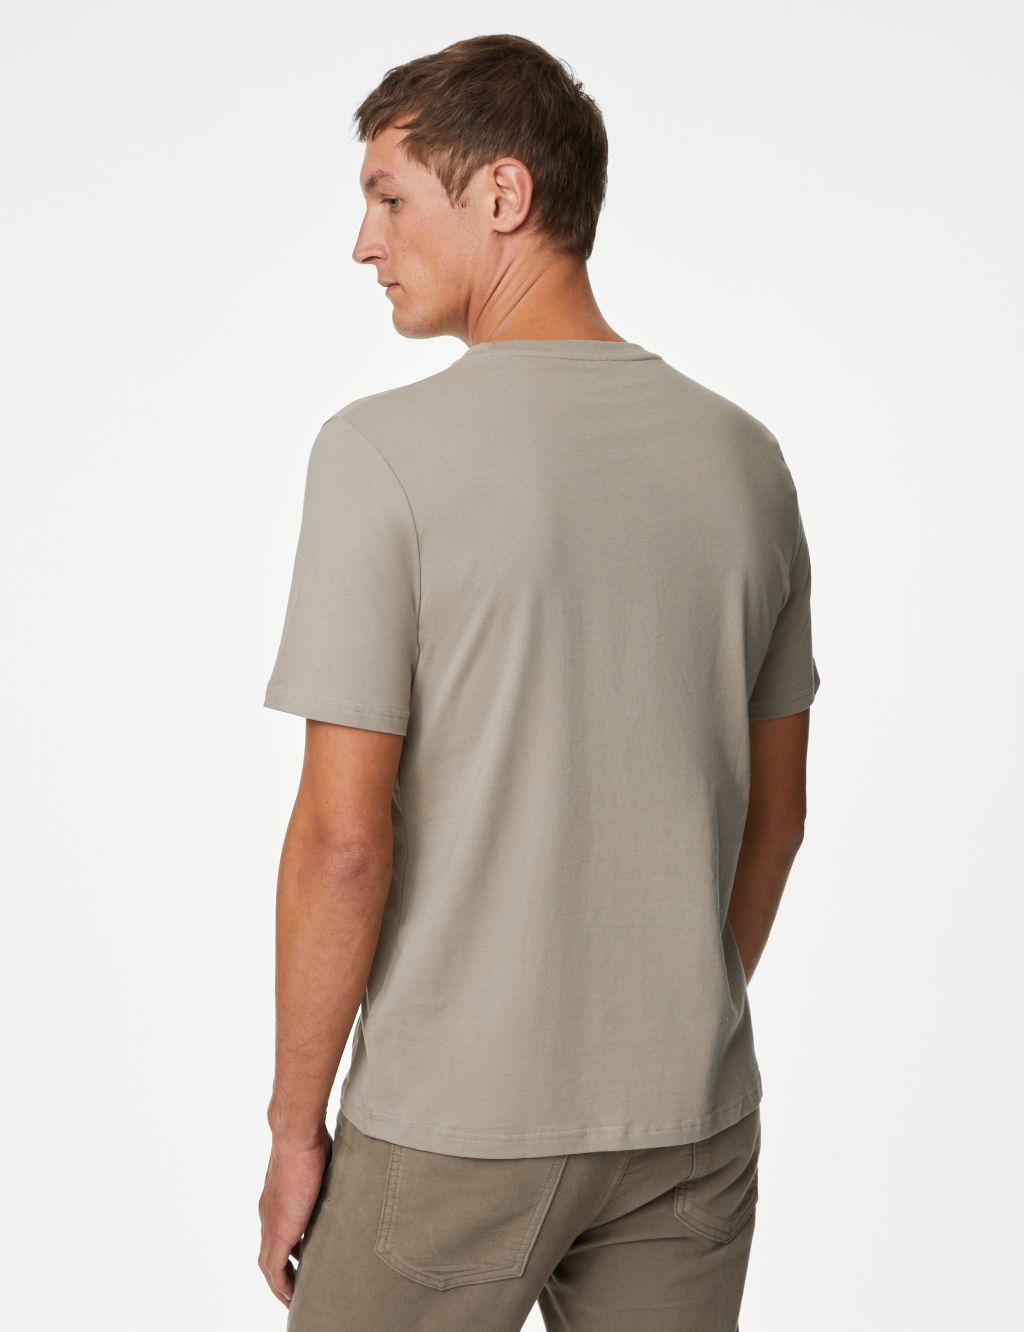 Regular Fit Pure Cotton Crew Neck T-Shirt image 5